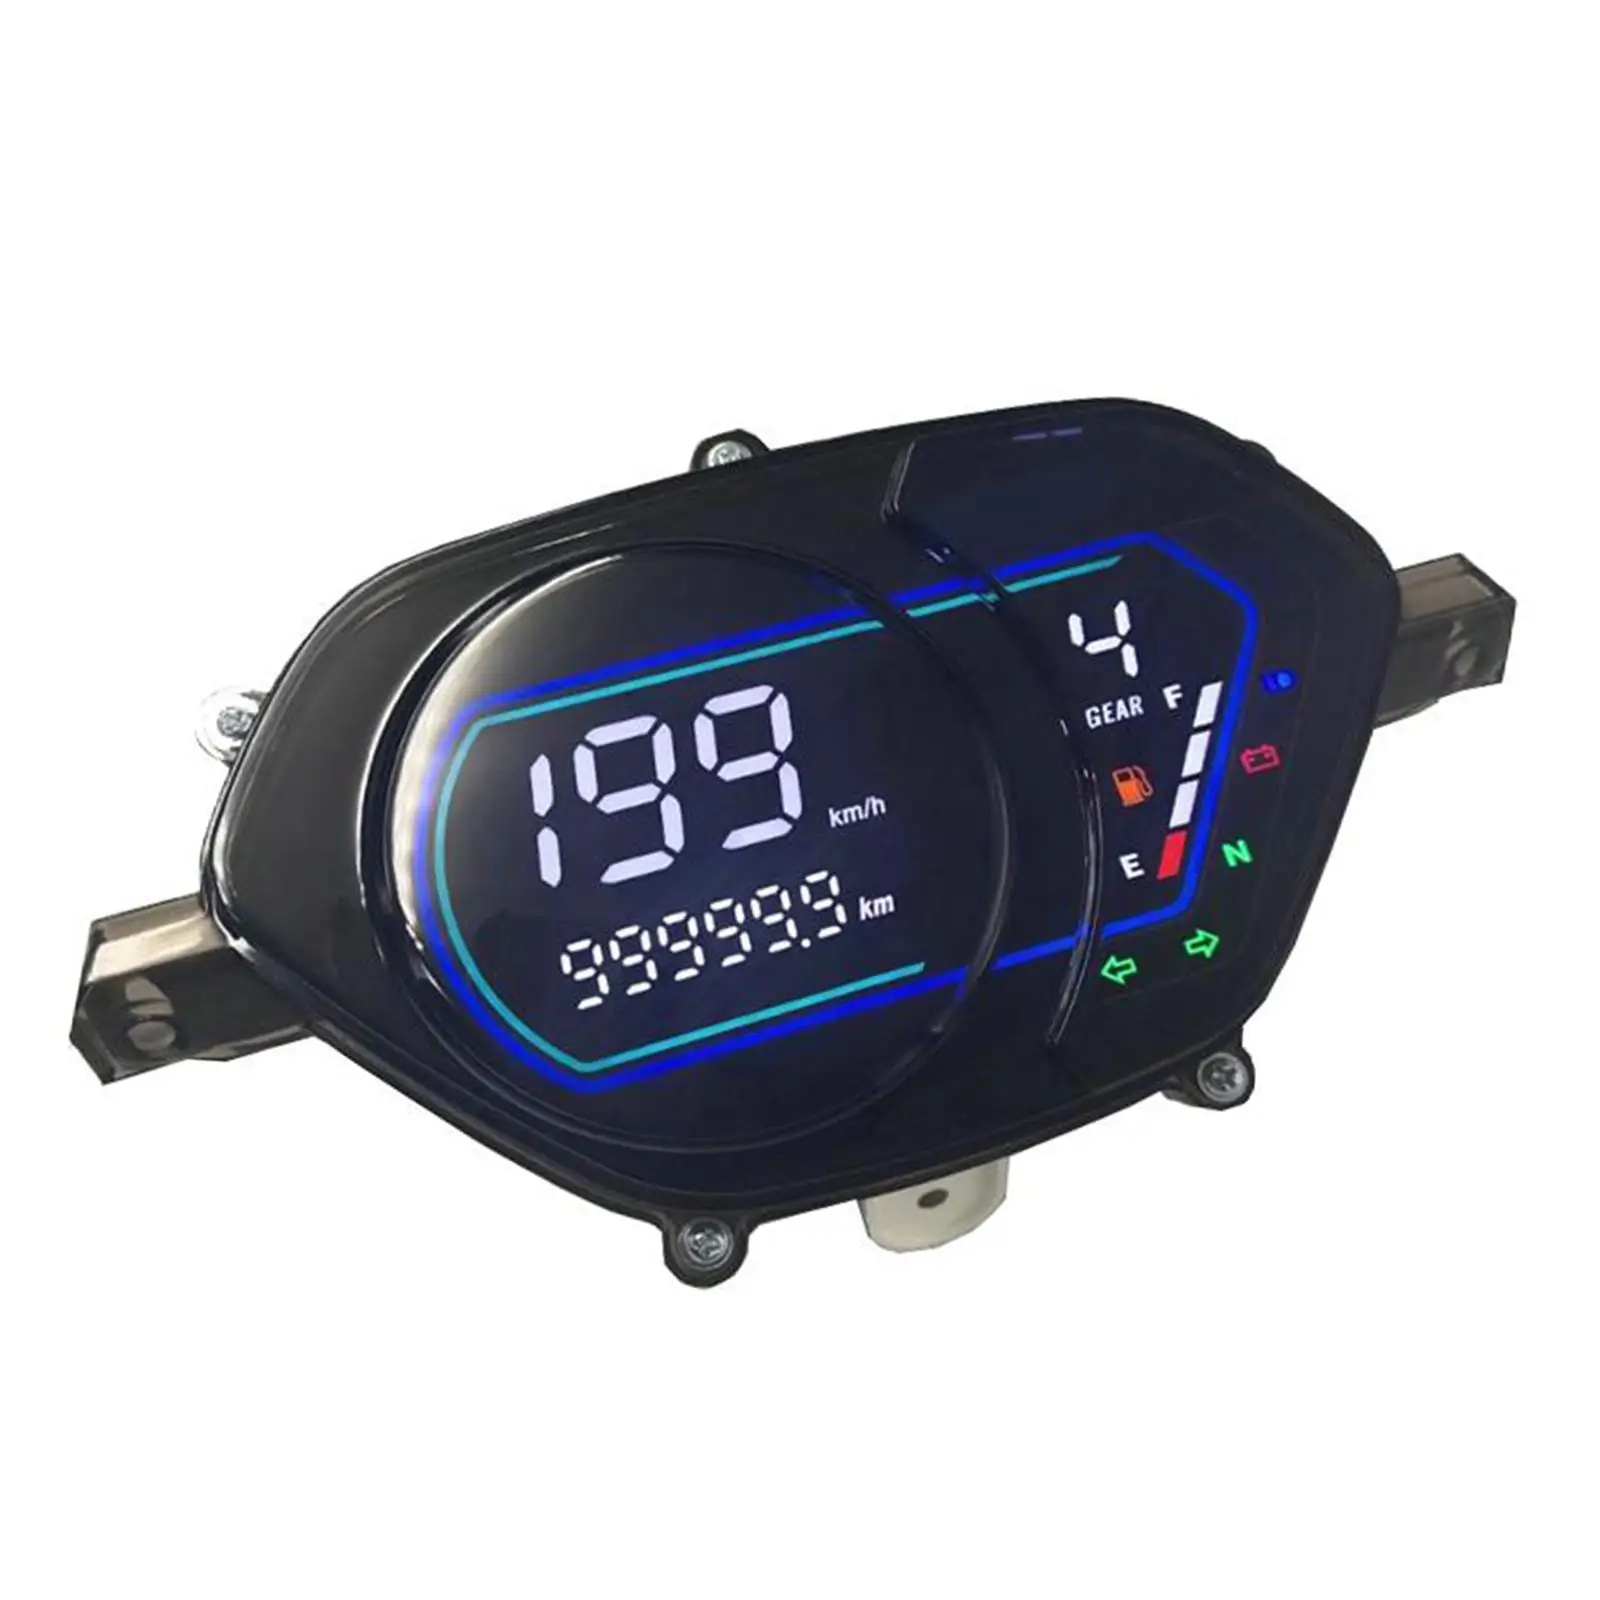 Motorbicycle Digital Instrument Parts Indicator Light Display Max 199km/H 12000RPM Tachometer Accessories Gauge Universal